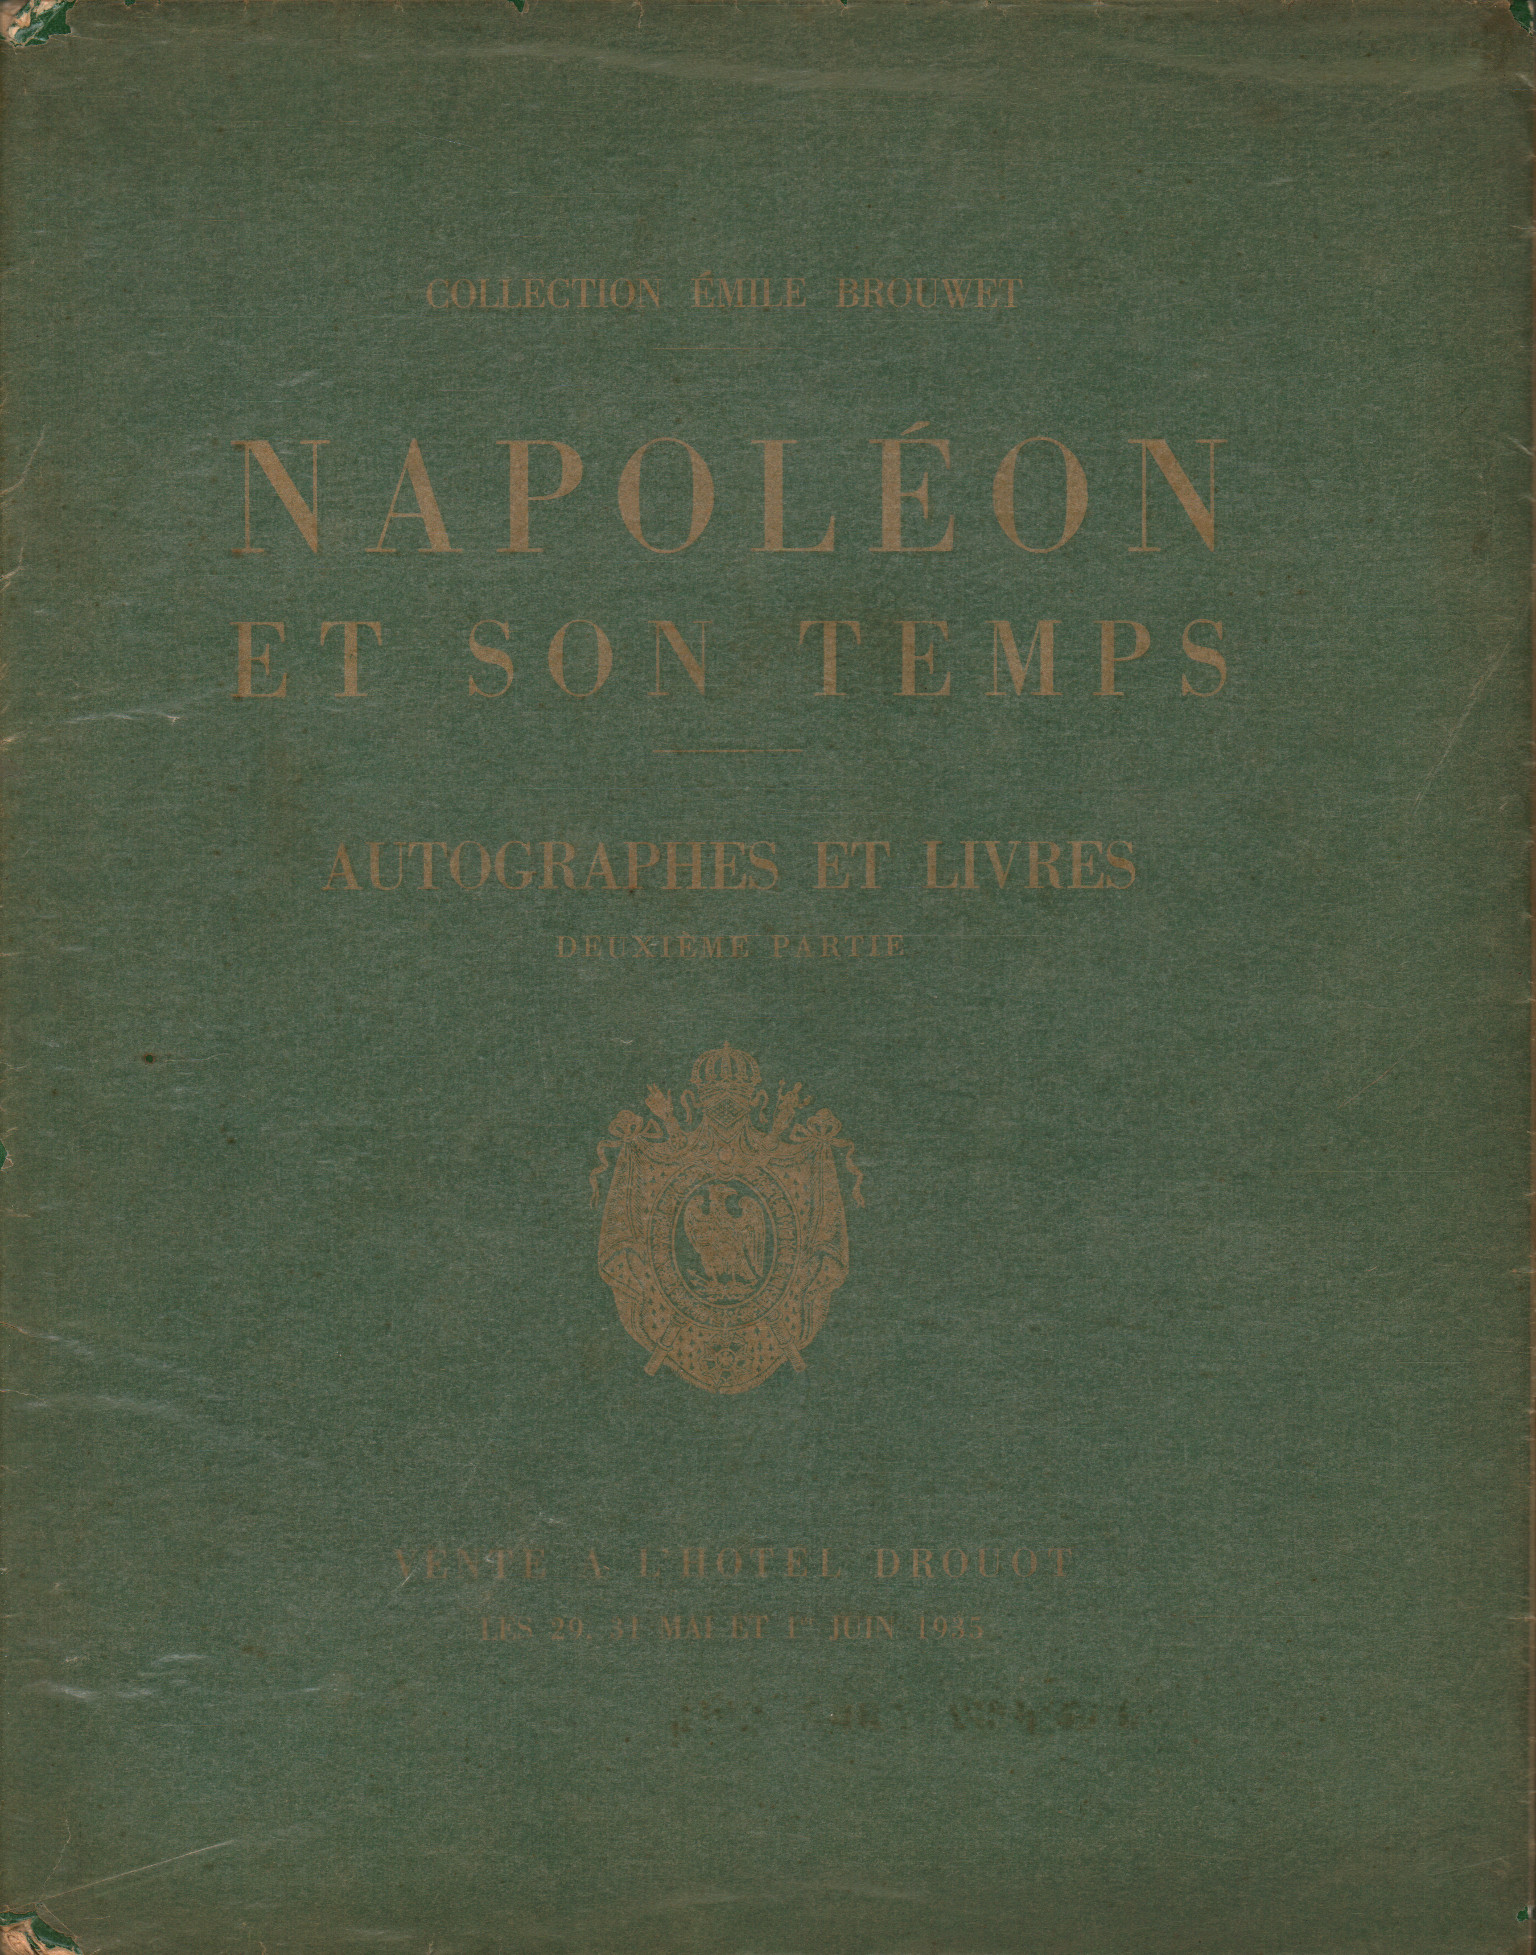 Napoleon and his tempers. Catalog de